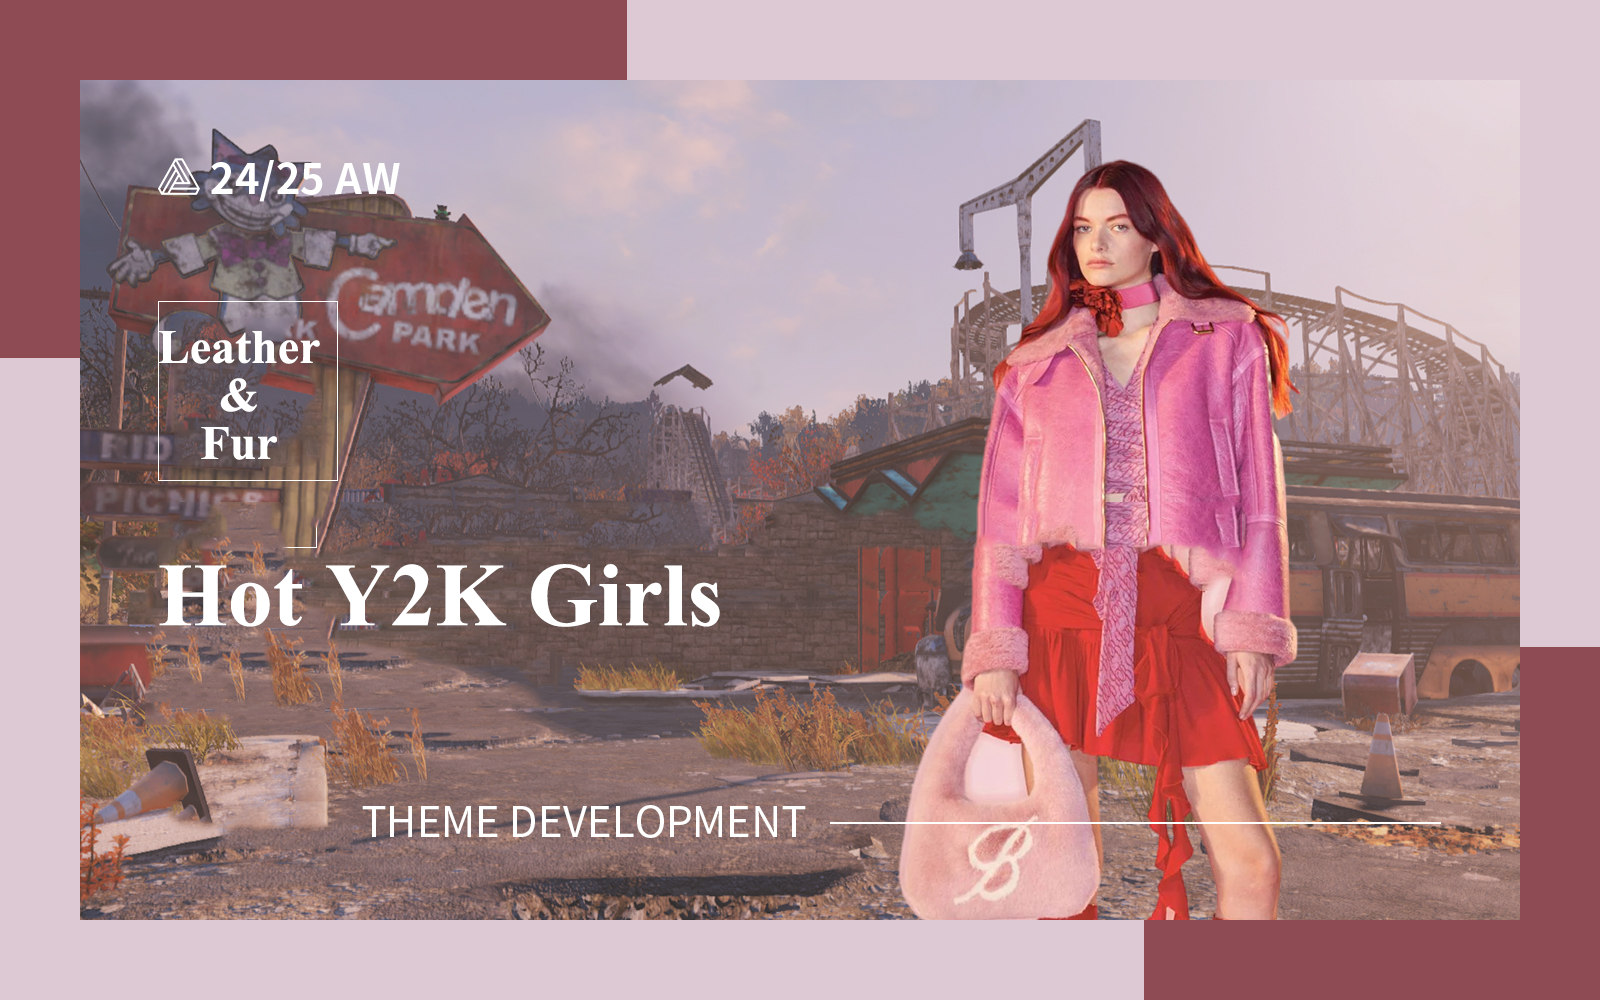 Hot Y2K Girls -- The Design Development of Women's Leather & Fur